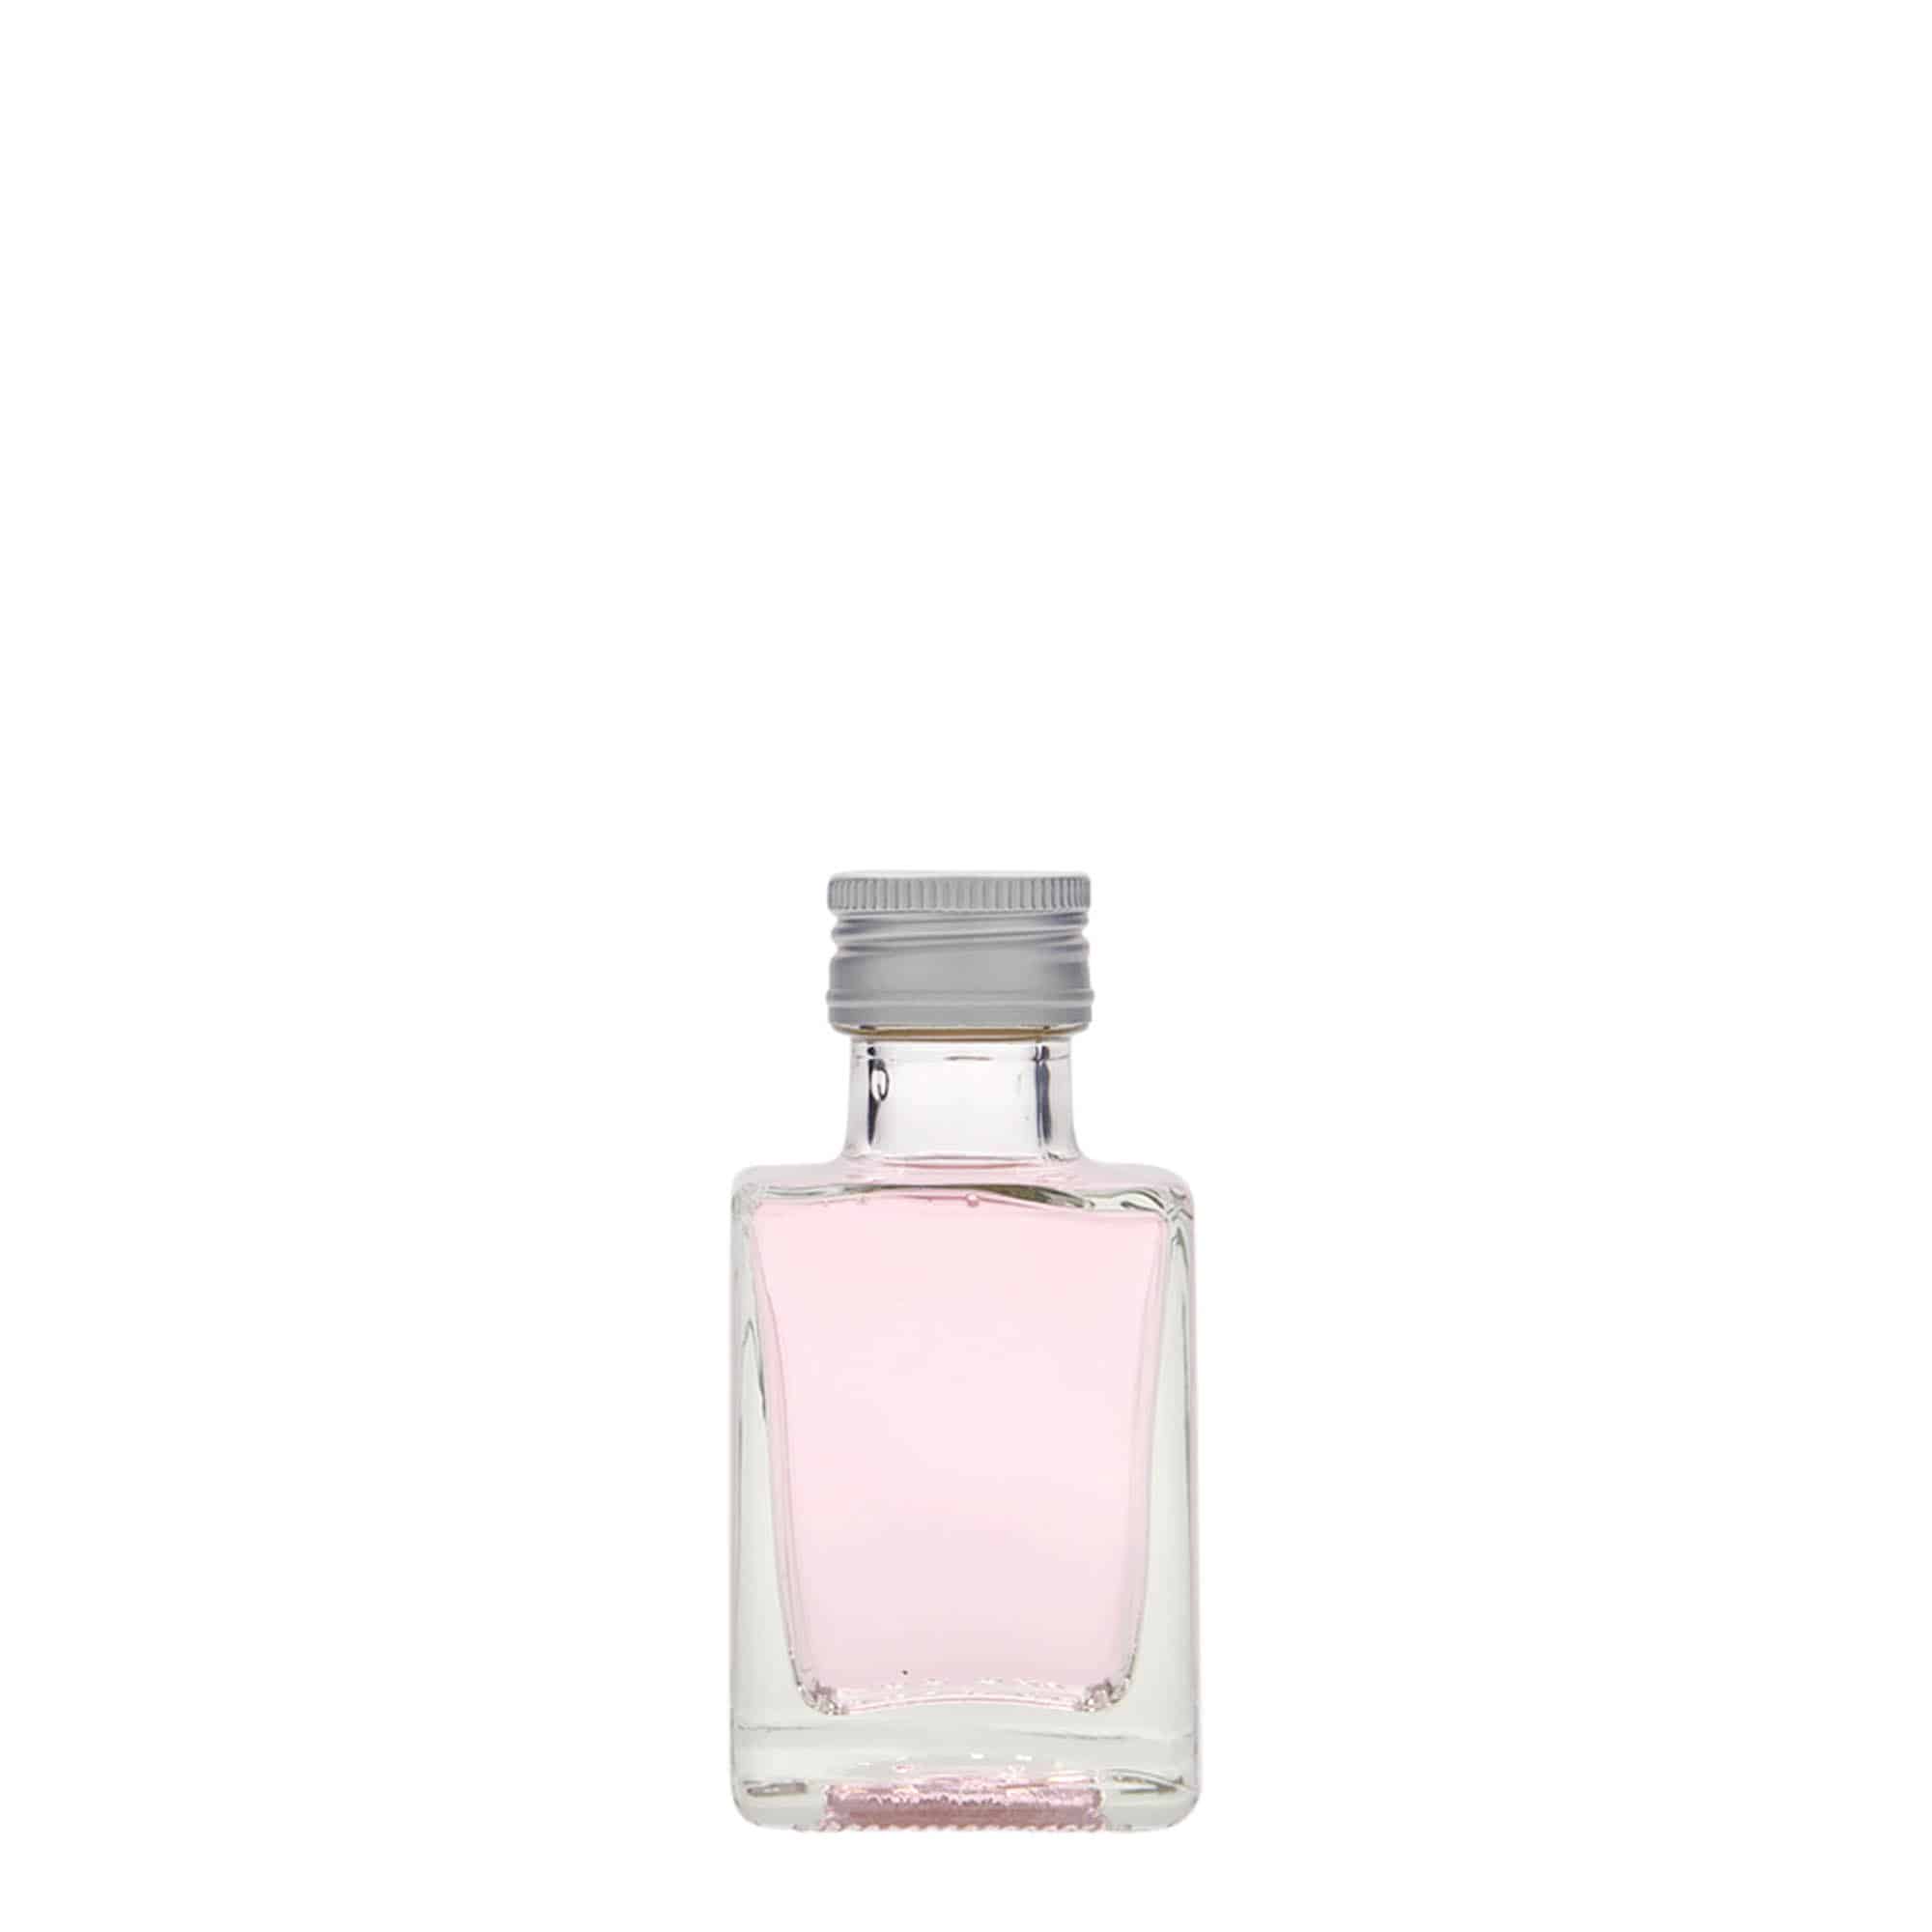 50 ml glass bottle 'Cube', square, closure: PP 24